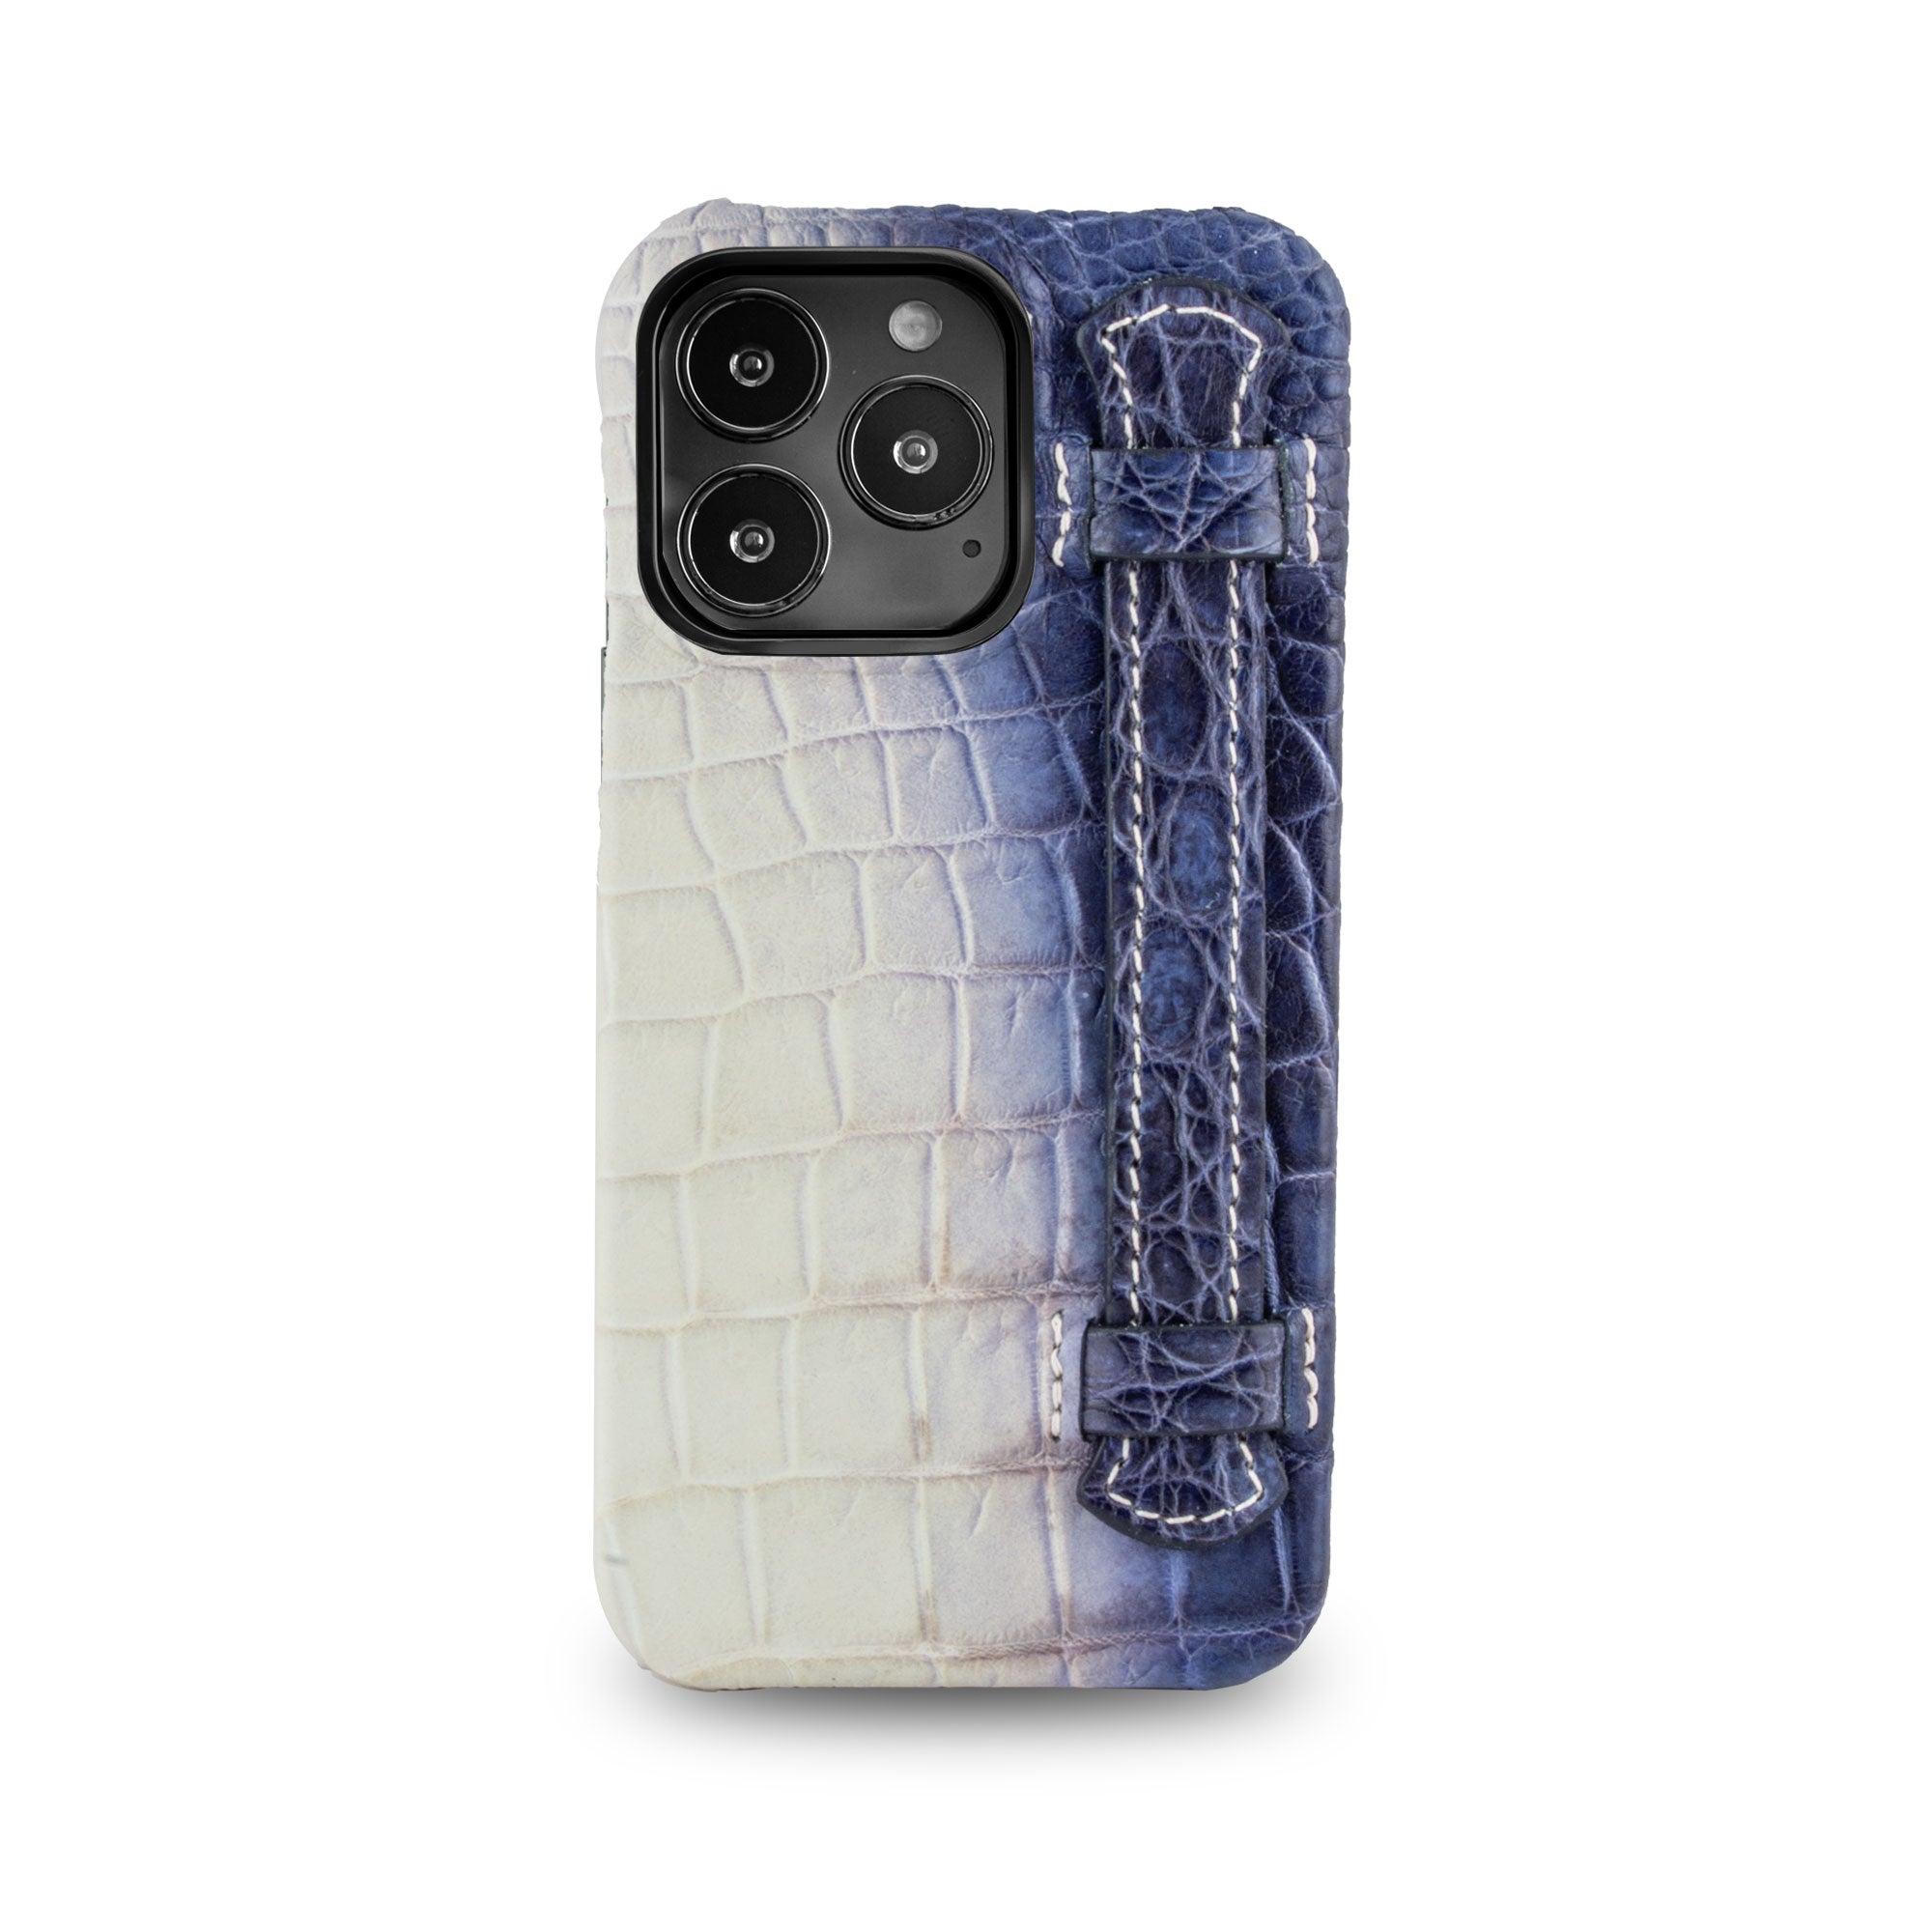 Leather iPhone HIMALAYA "Strap case" / cover - iPhone 15, 14 & 13 Pro & Pro Max - Genuine crocodile